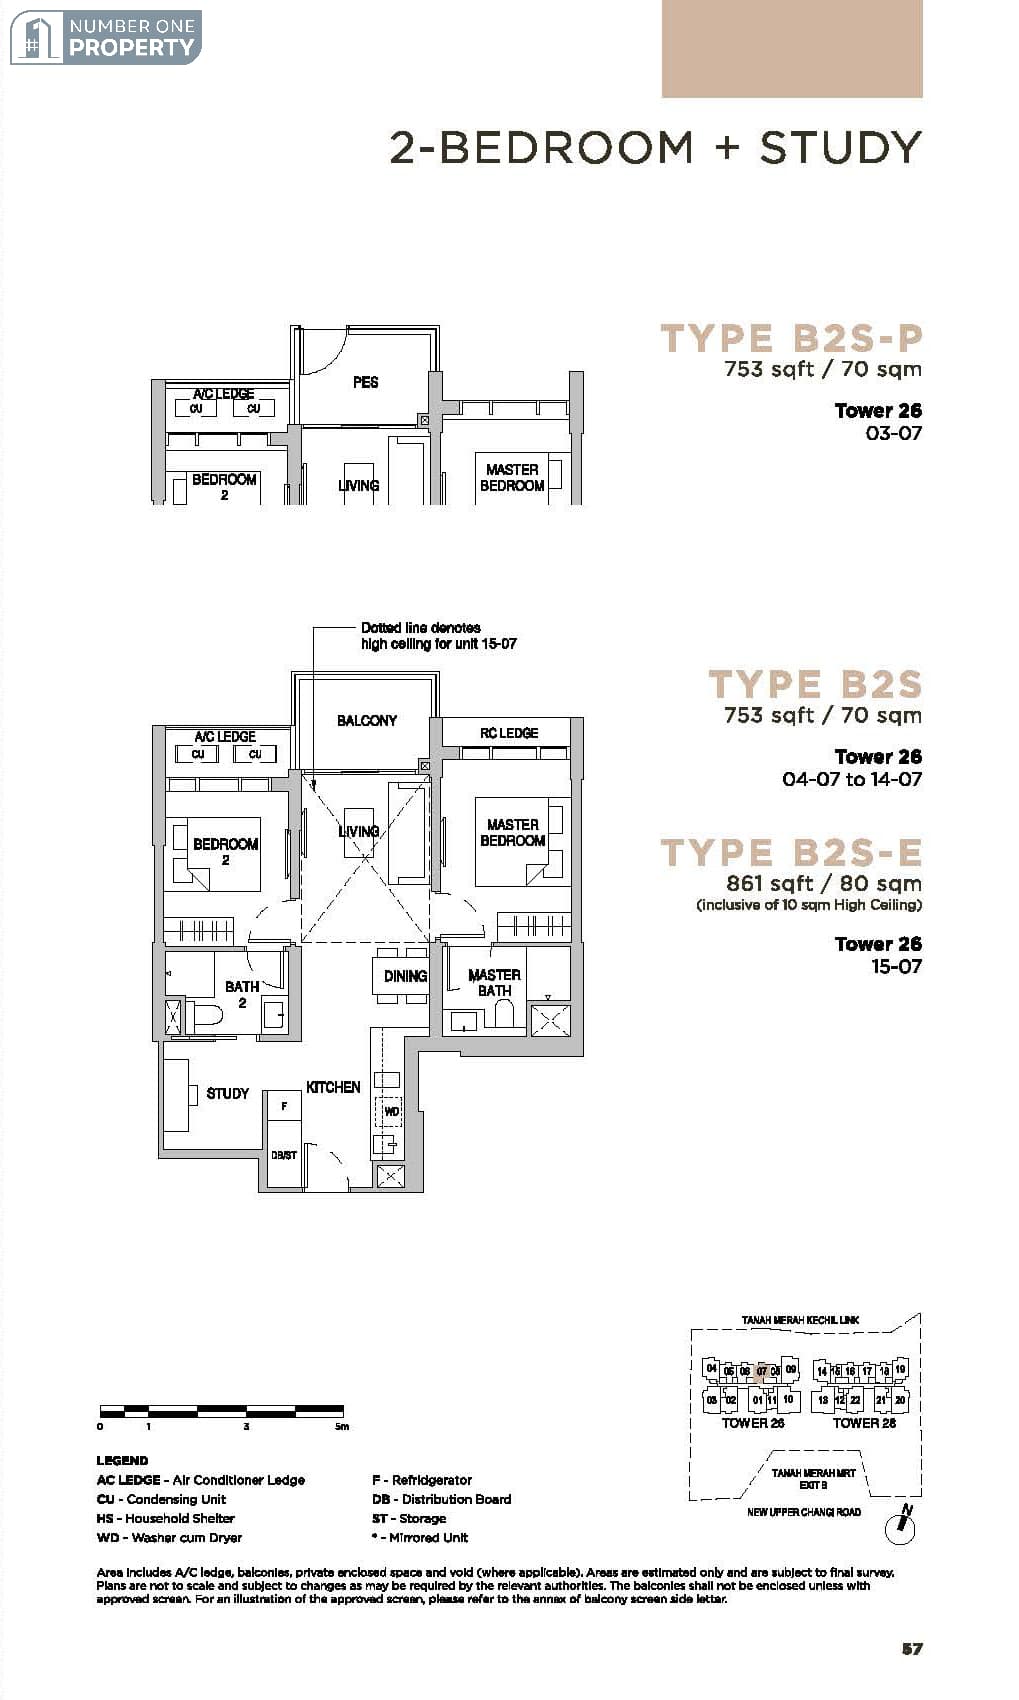 Sceneca Residence Floor Plan 2 BedroomStudy Type B2S753sf